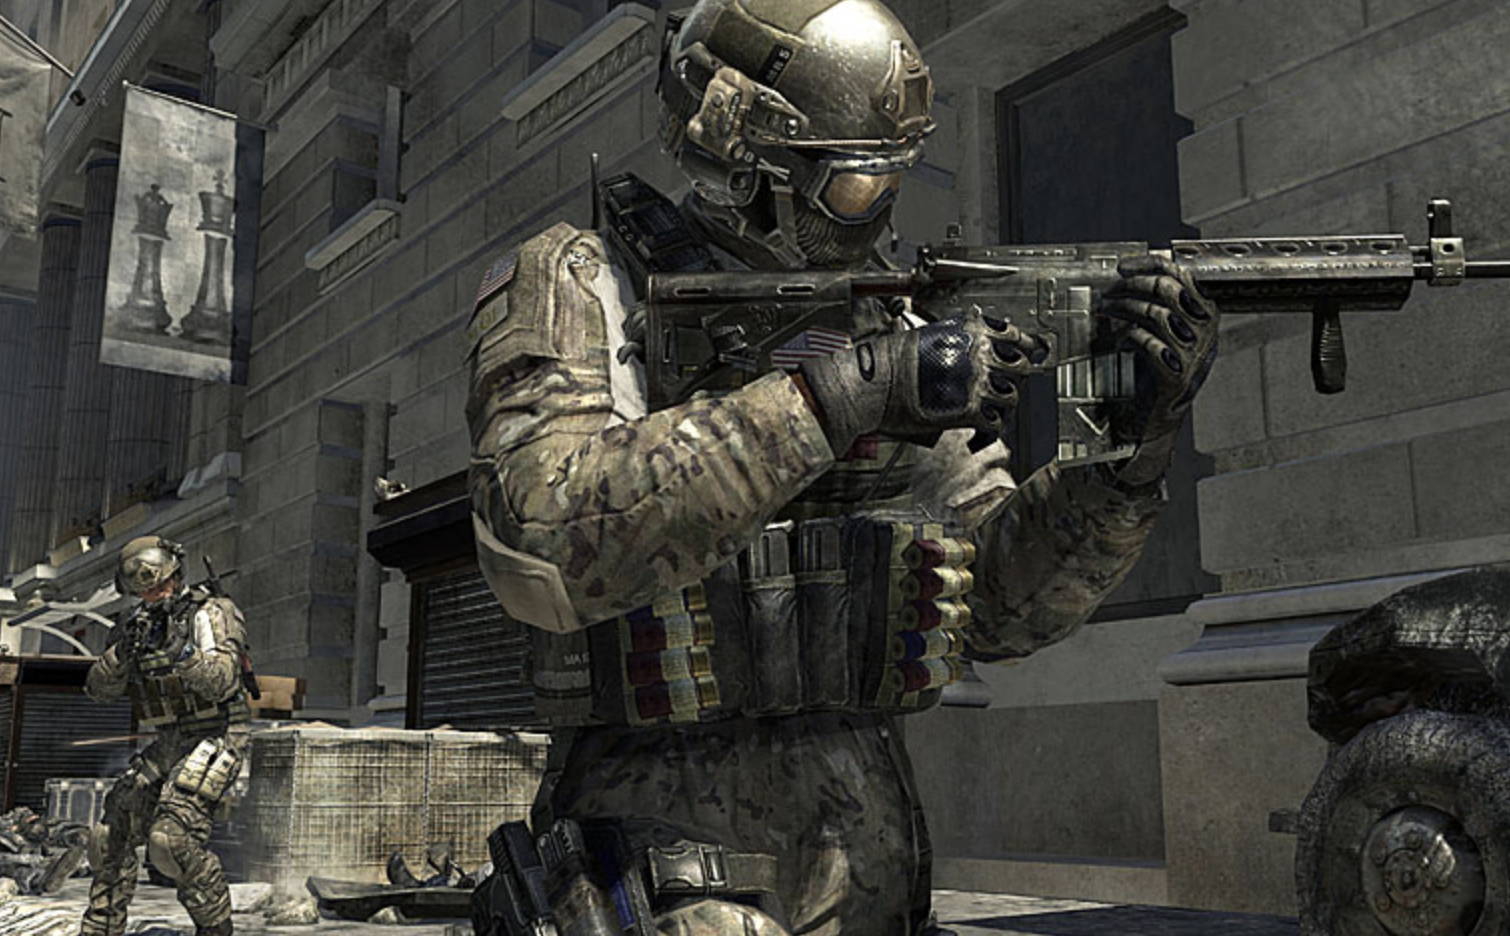 Buy Call of Duty Modern Warfare 3 2023 Closed Beta Xbox One Compare Prices